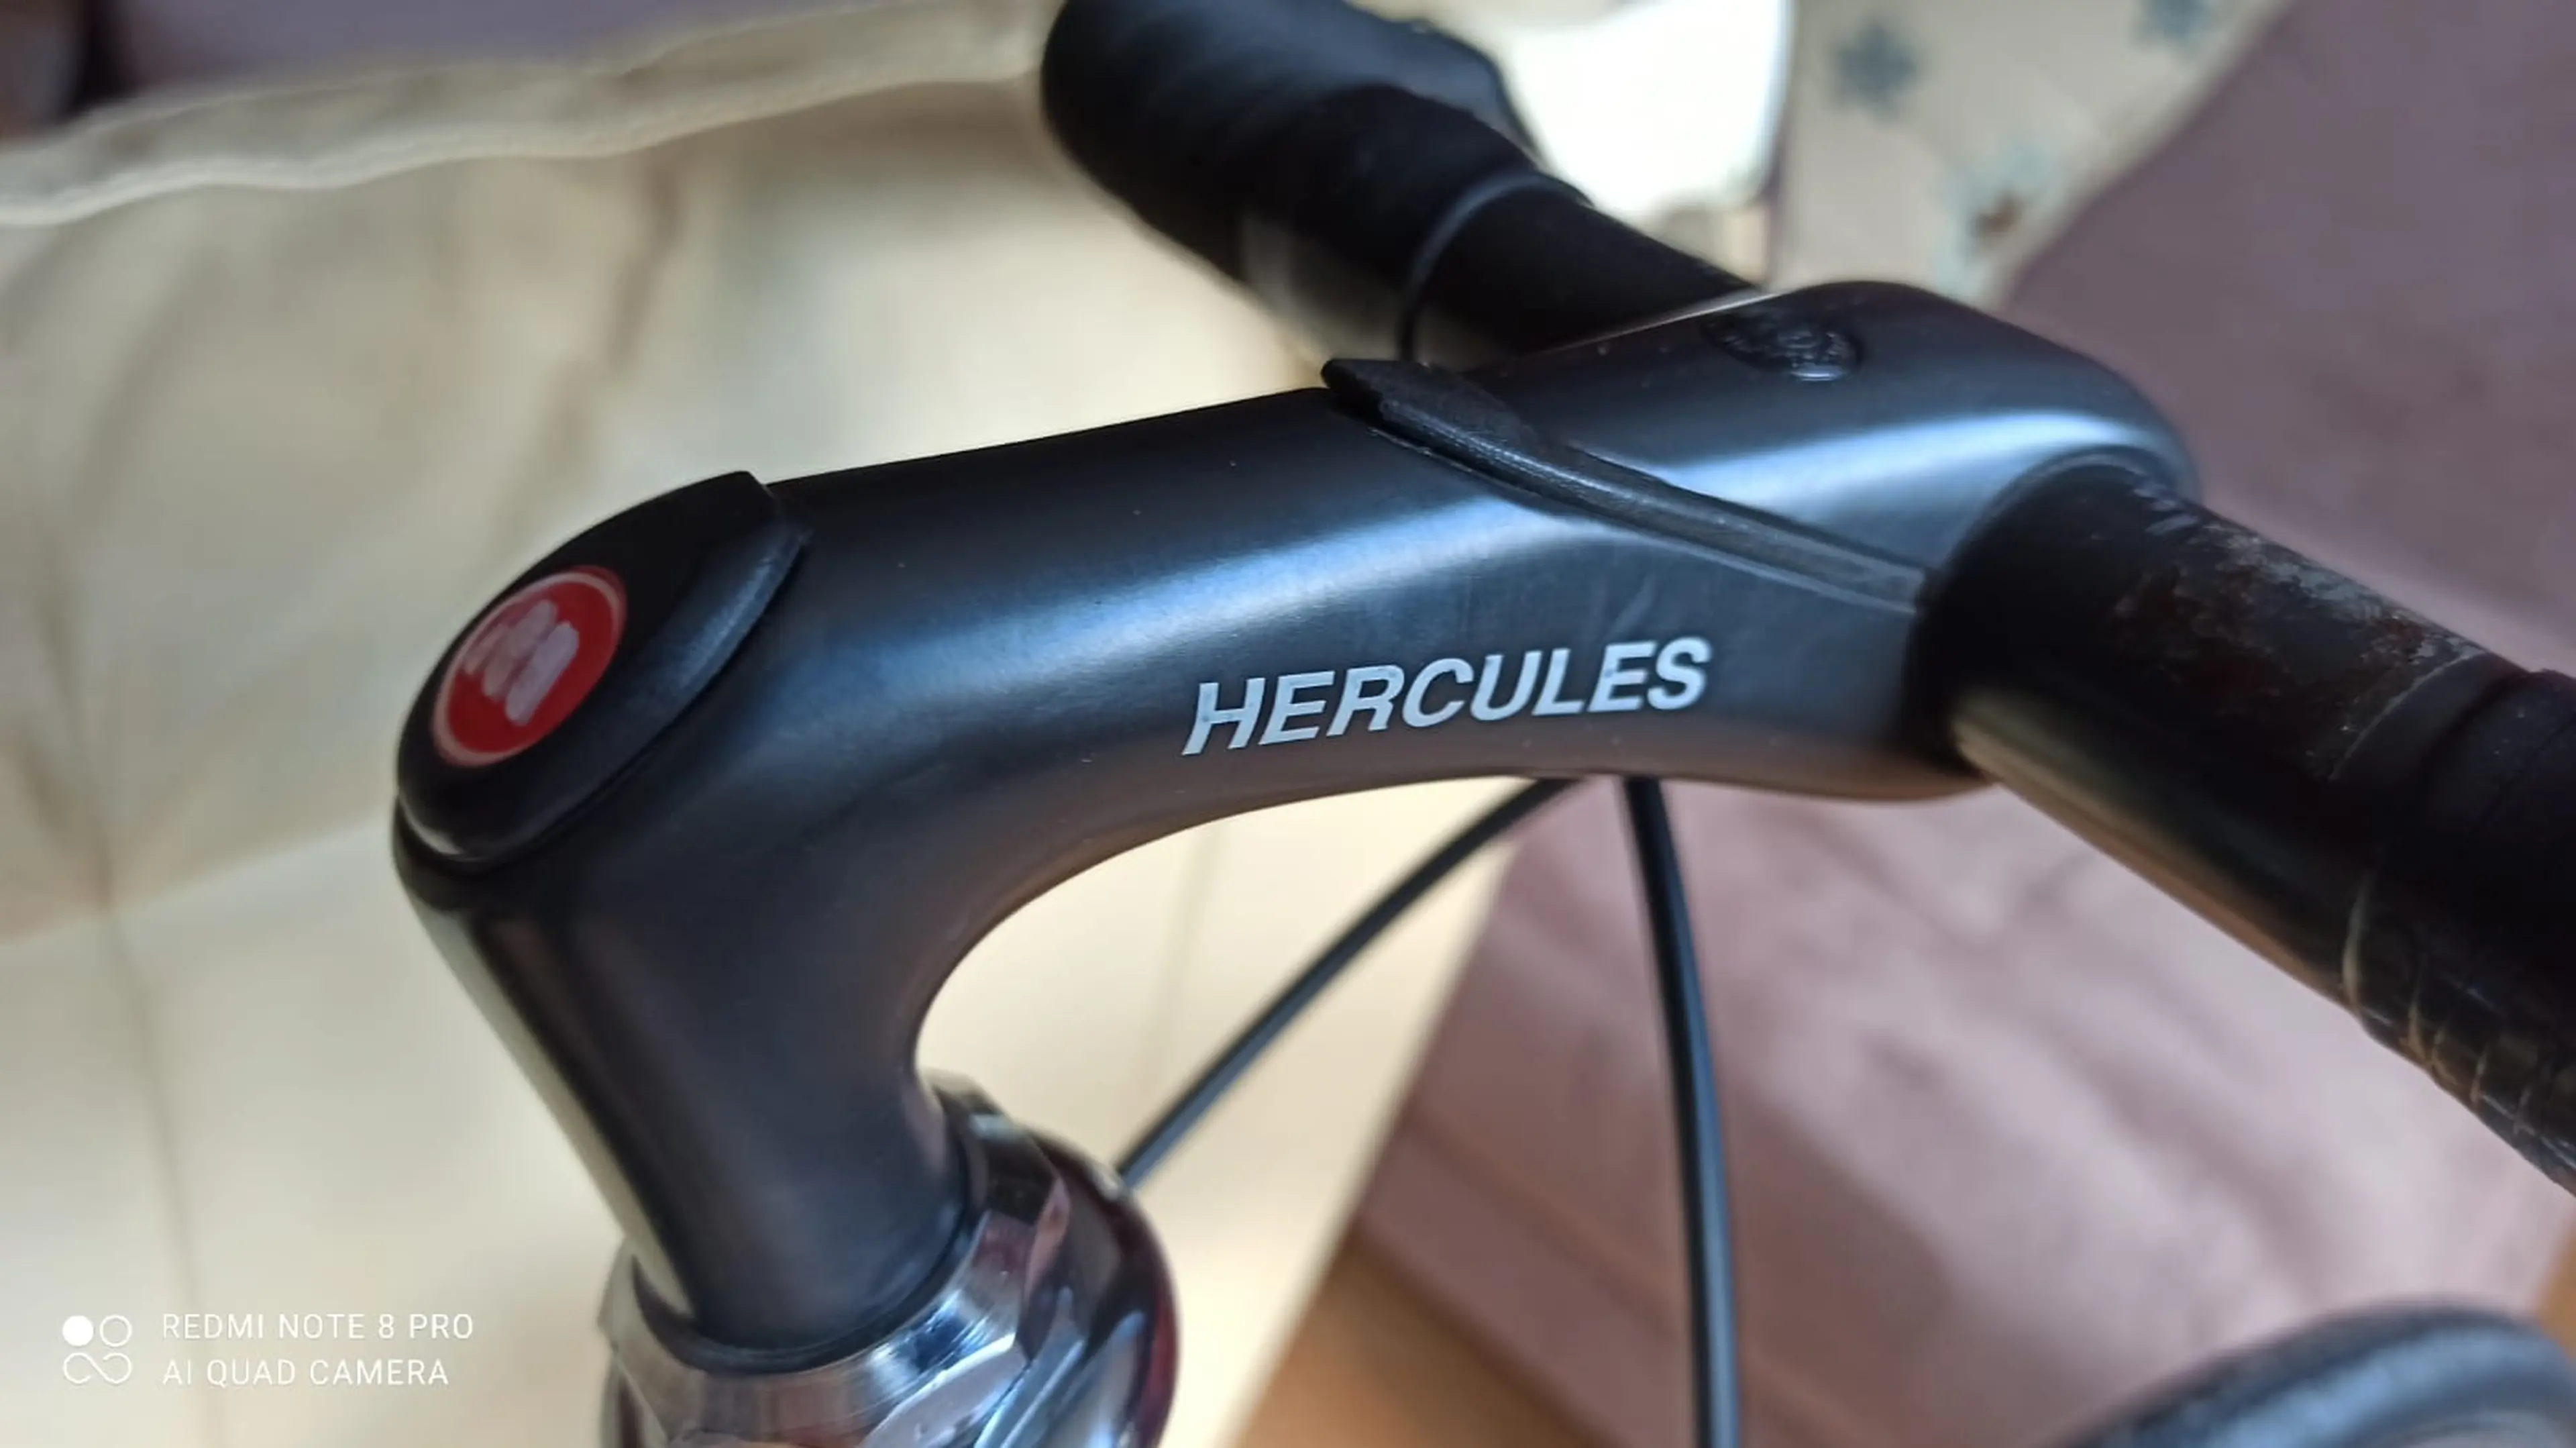 7. Bicicleta Hercules Salerno